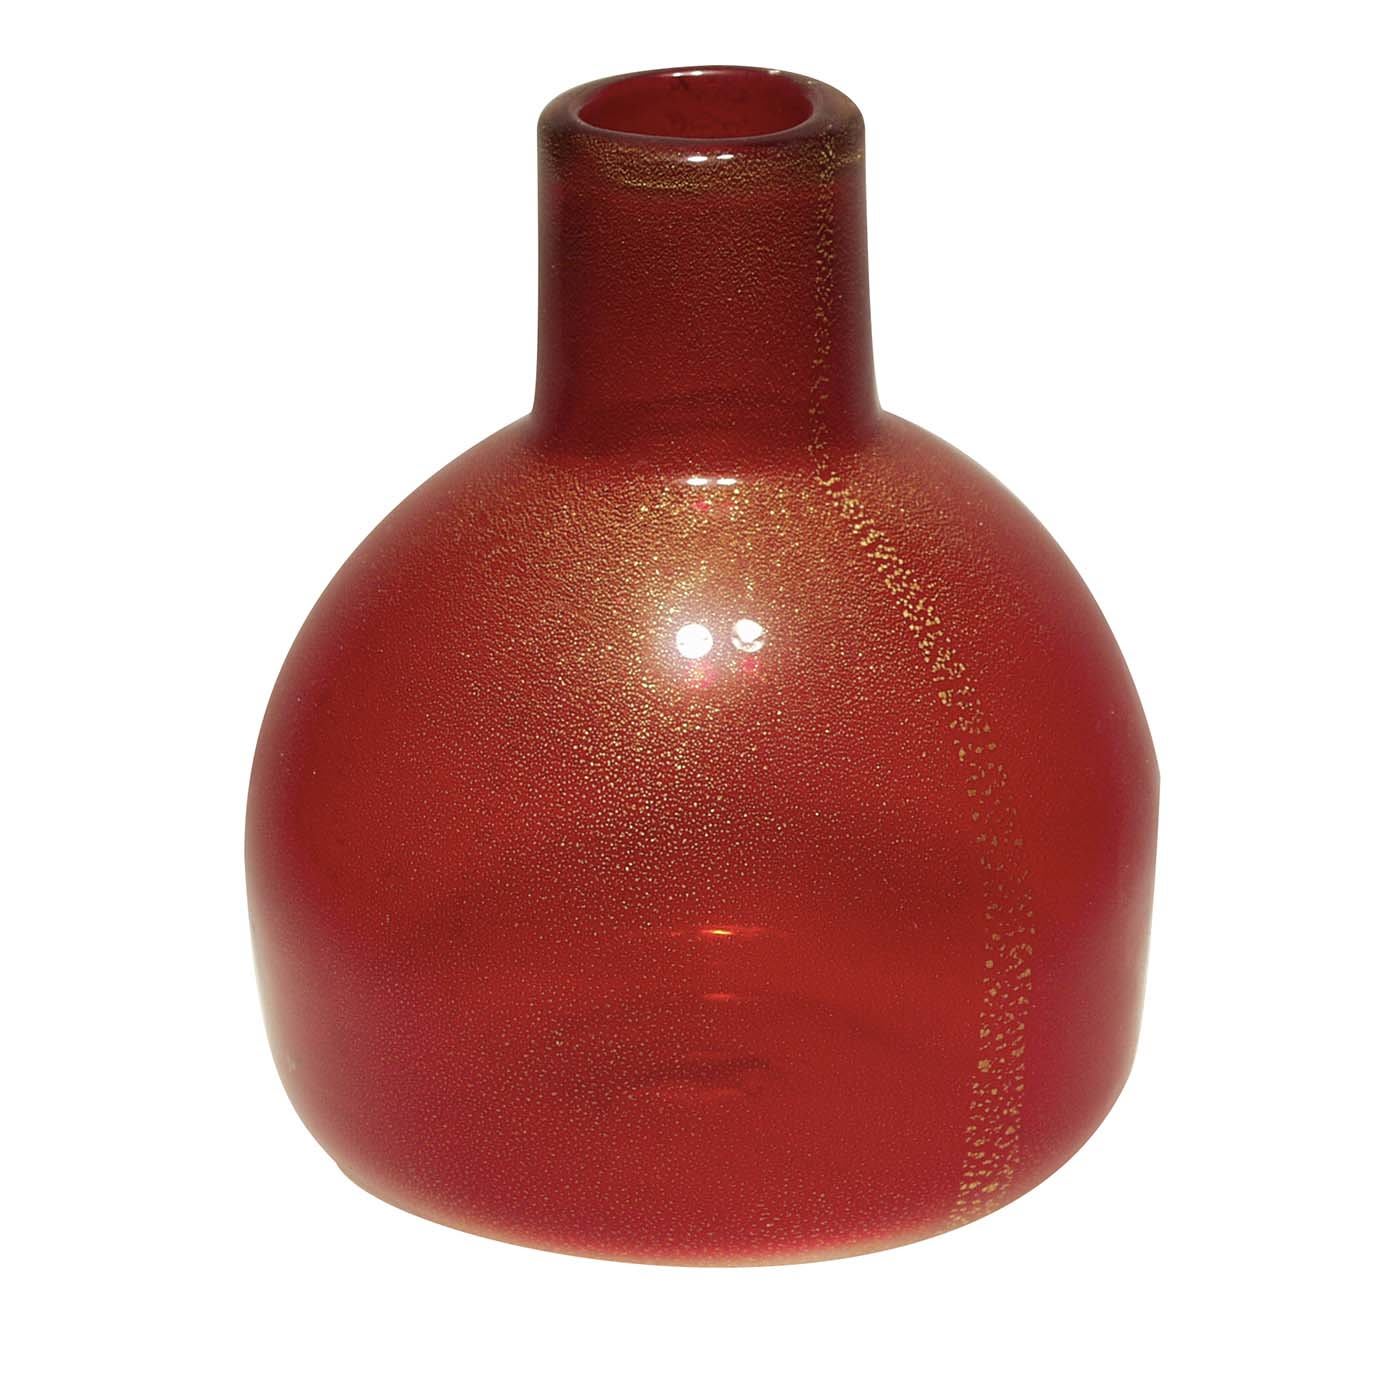 Modigliani Red and Gold Vase - Murano Glam